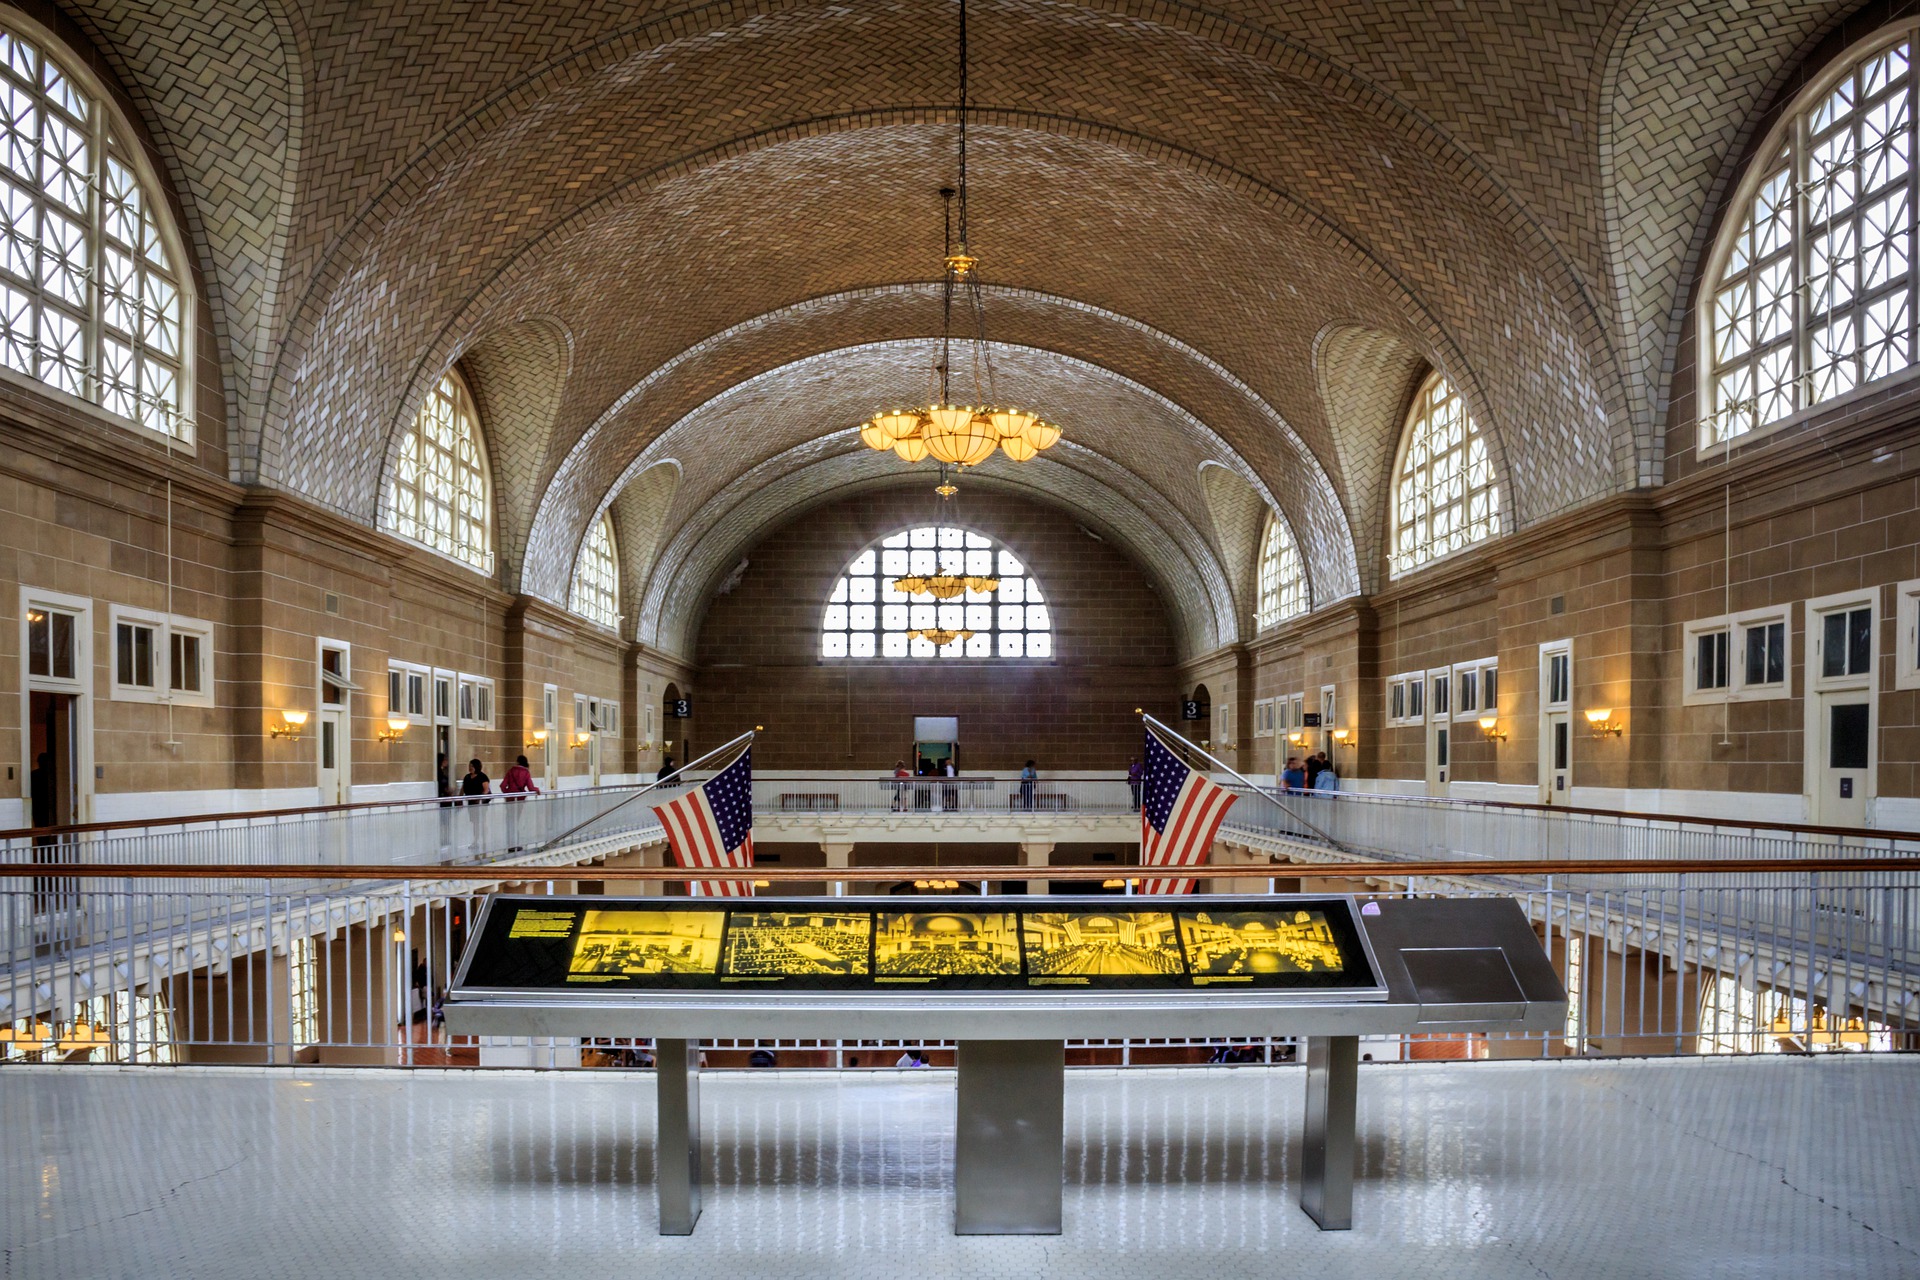 Inside the Ellis Island immigration museum